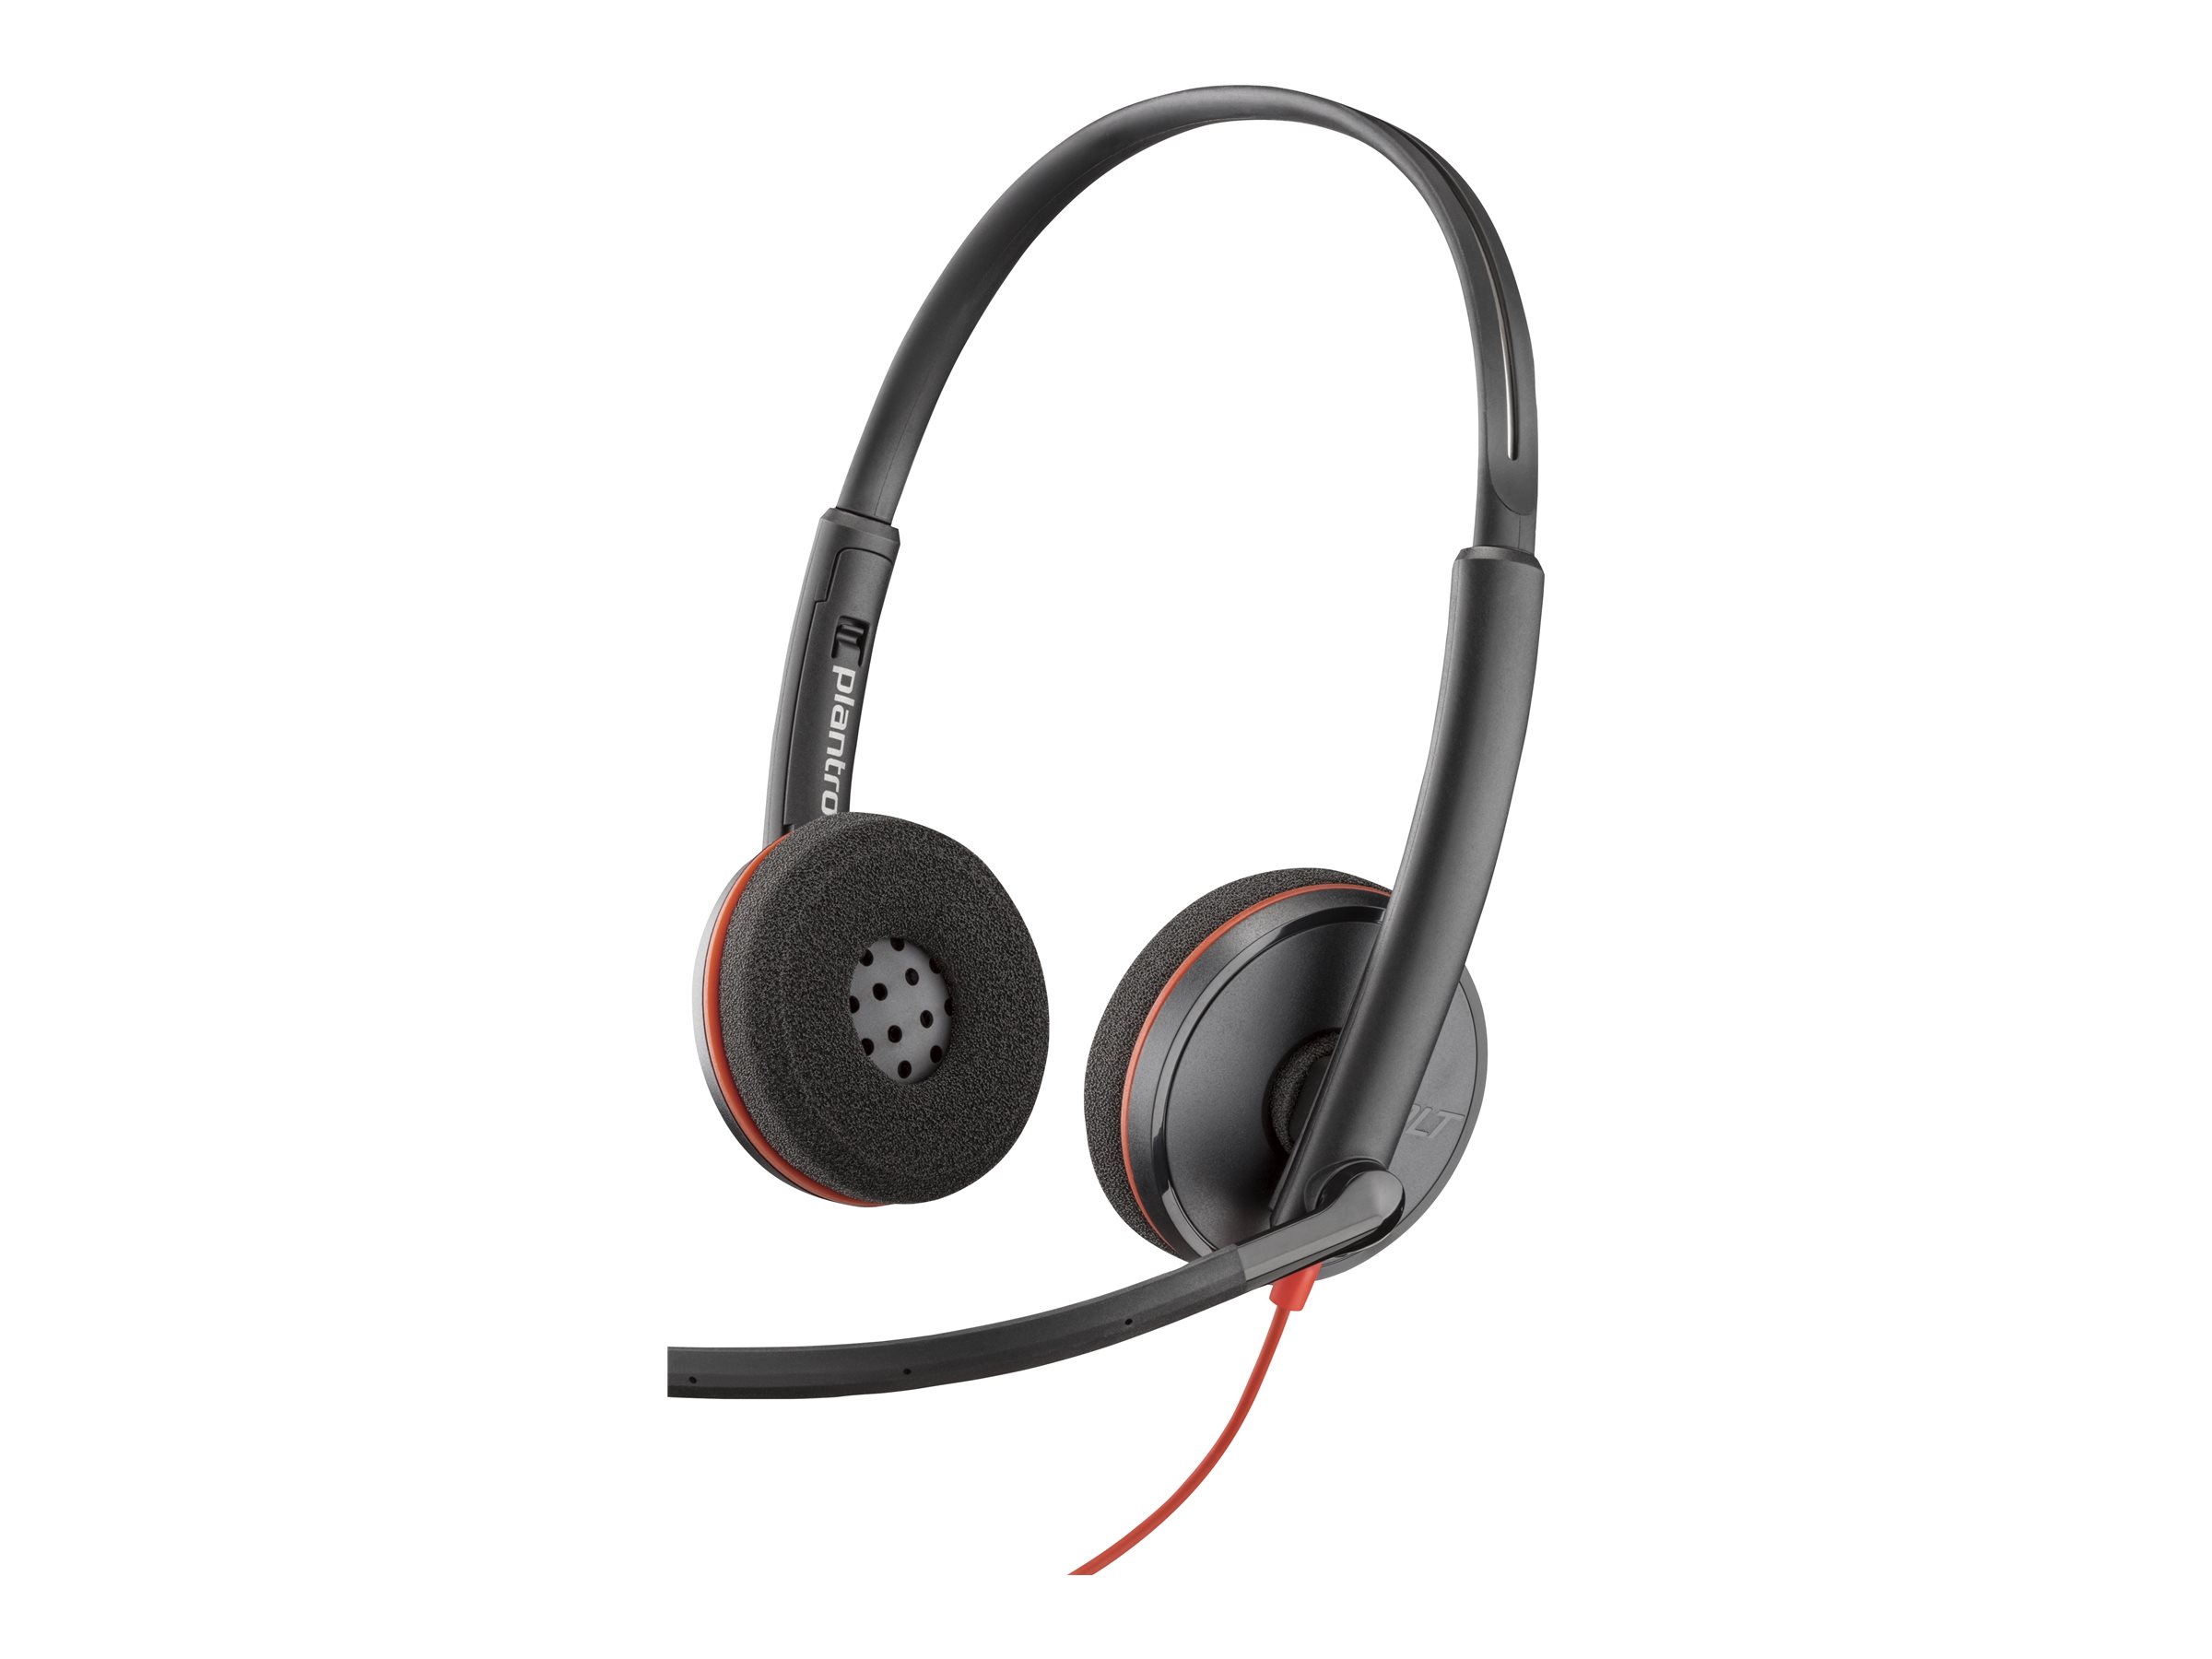 Poly Blackwire 3220 - 3200 Series - Headset - On-Ear - kabelgebunden - USB-A